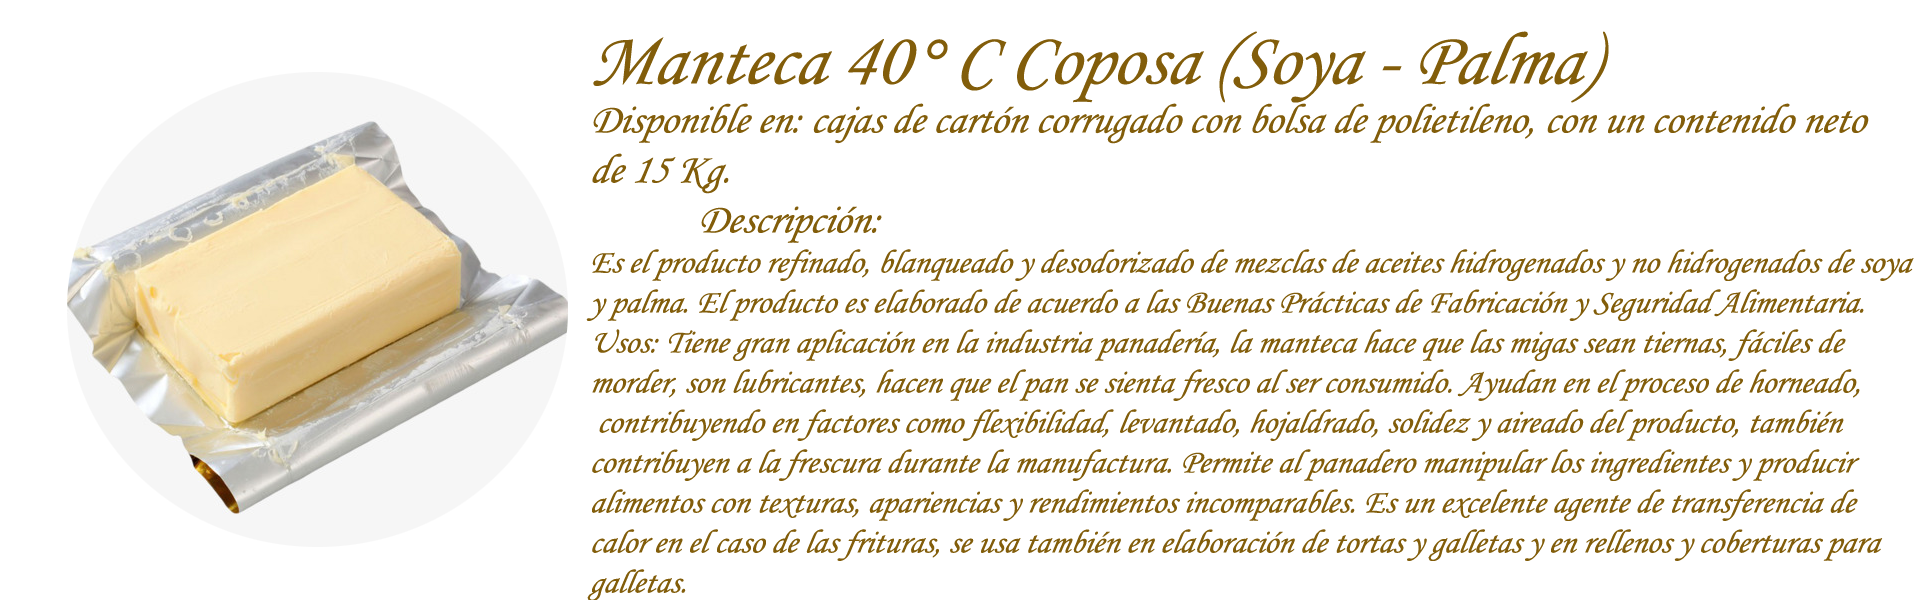 Manteca 40° C Coposa (Soya - Palma)